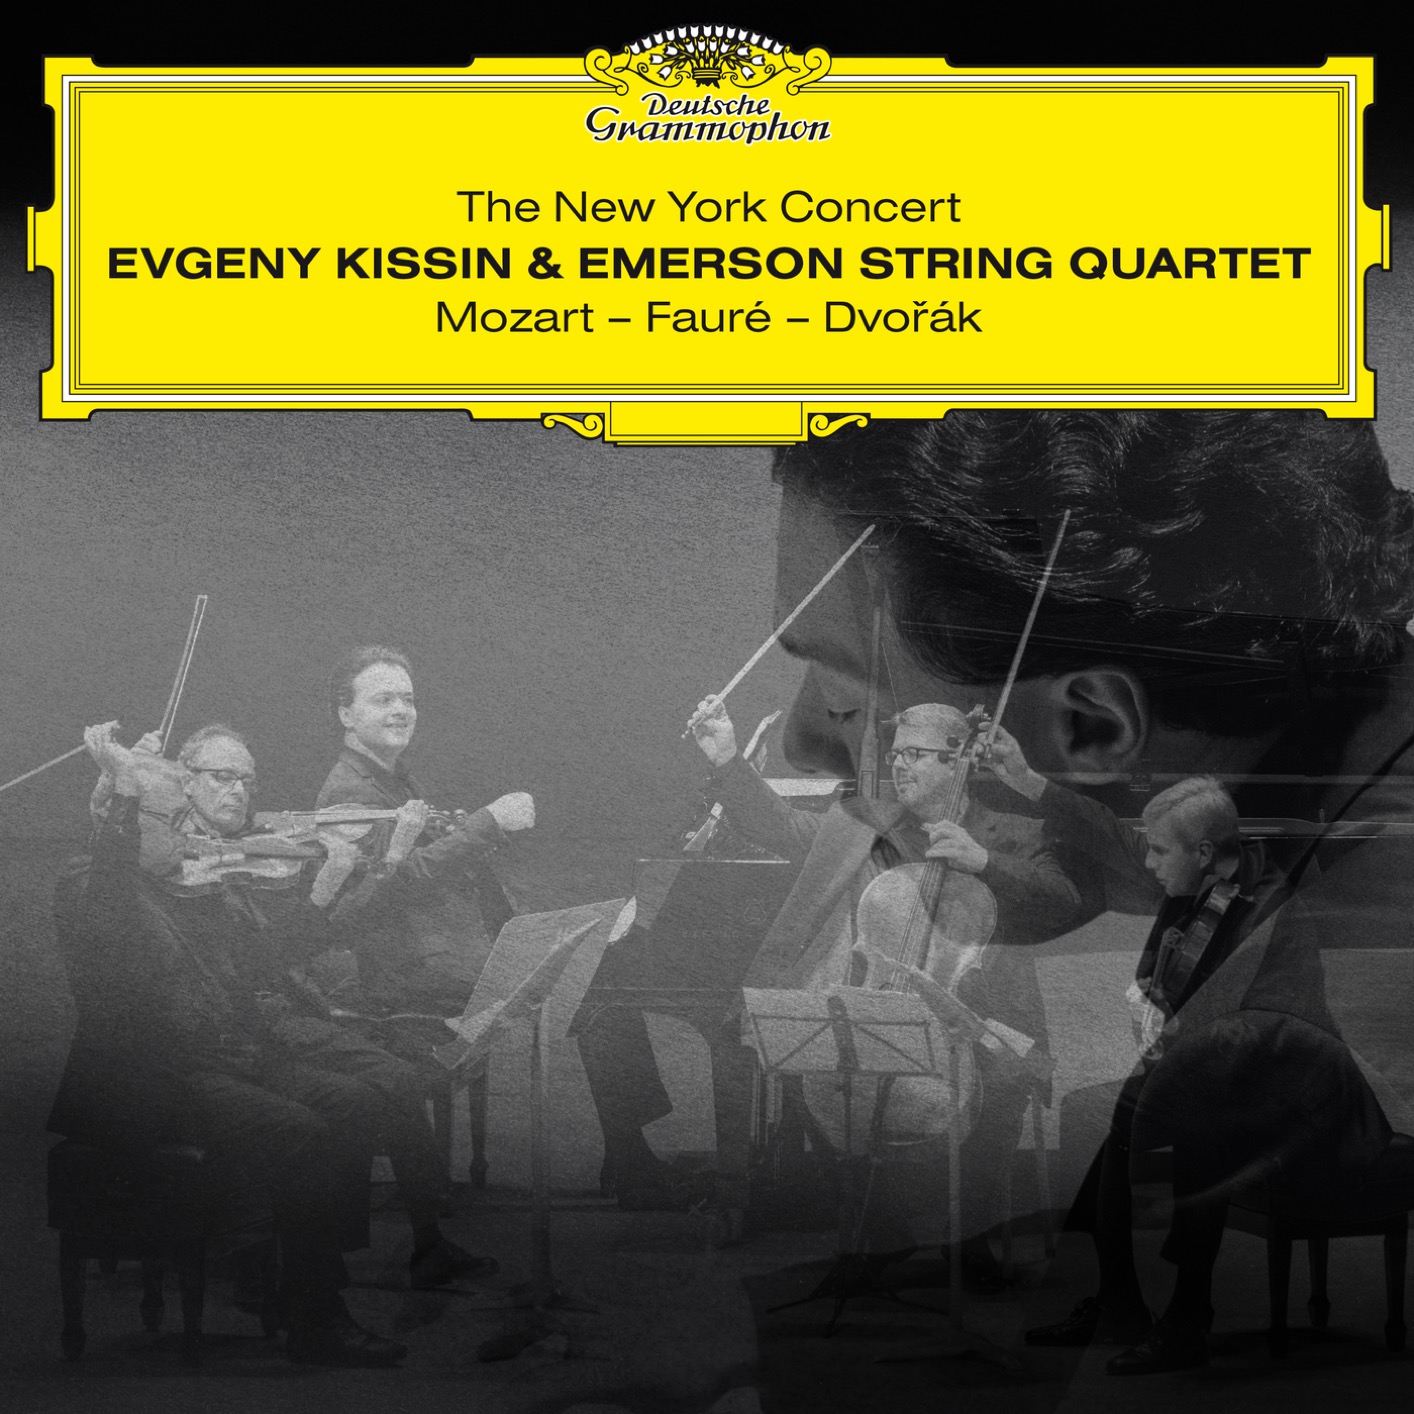 Evgeny Kissin & Emerson String Quartet - The New York Concert (2019) [FLAC 24bit/96kHz]